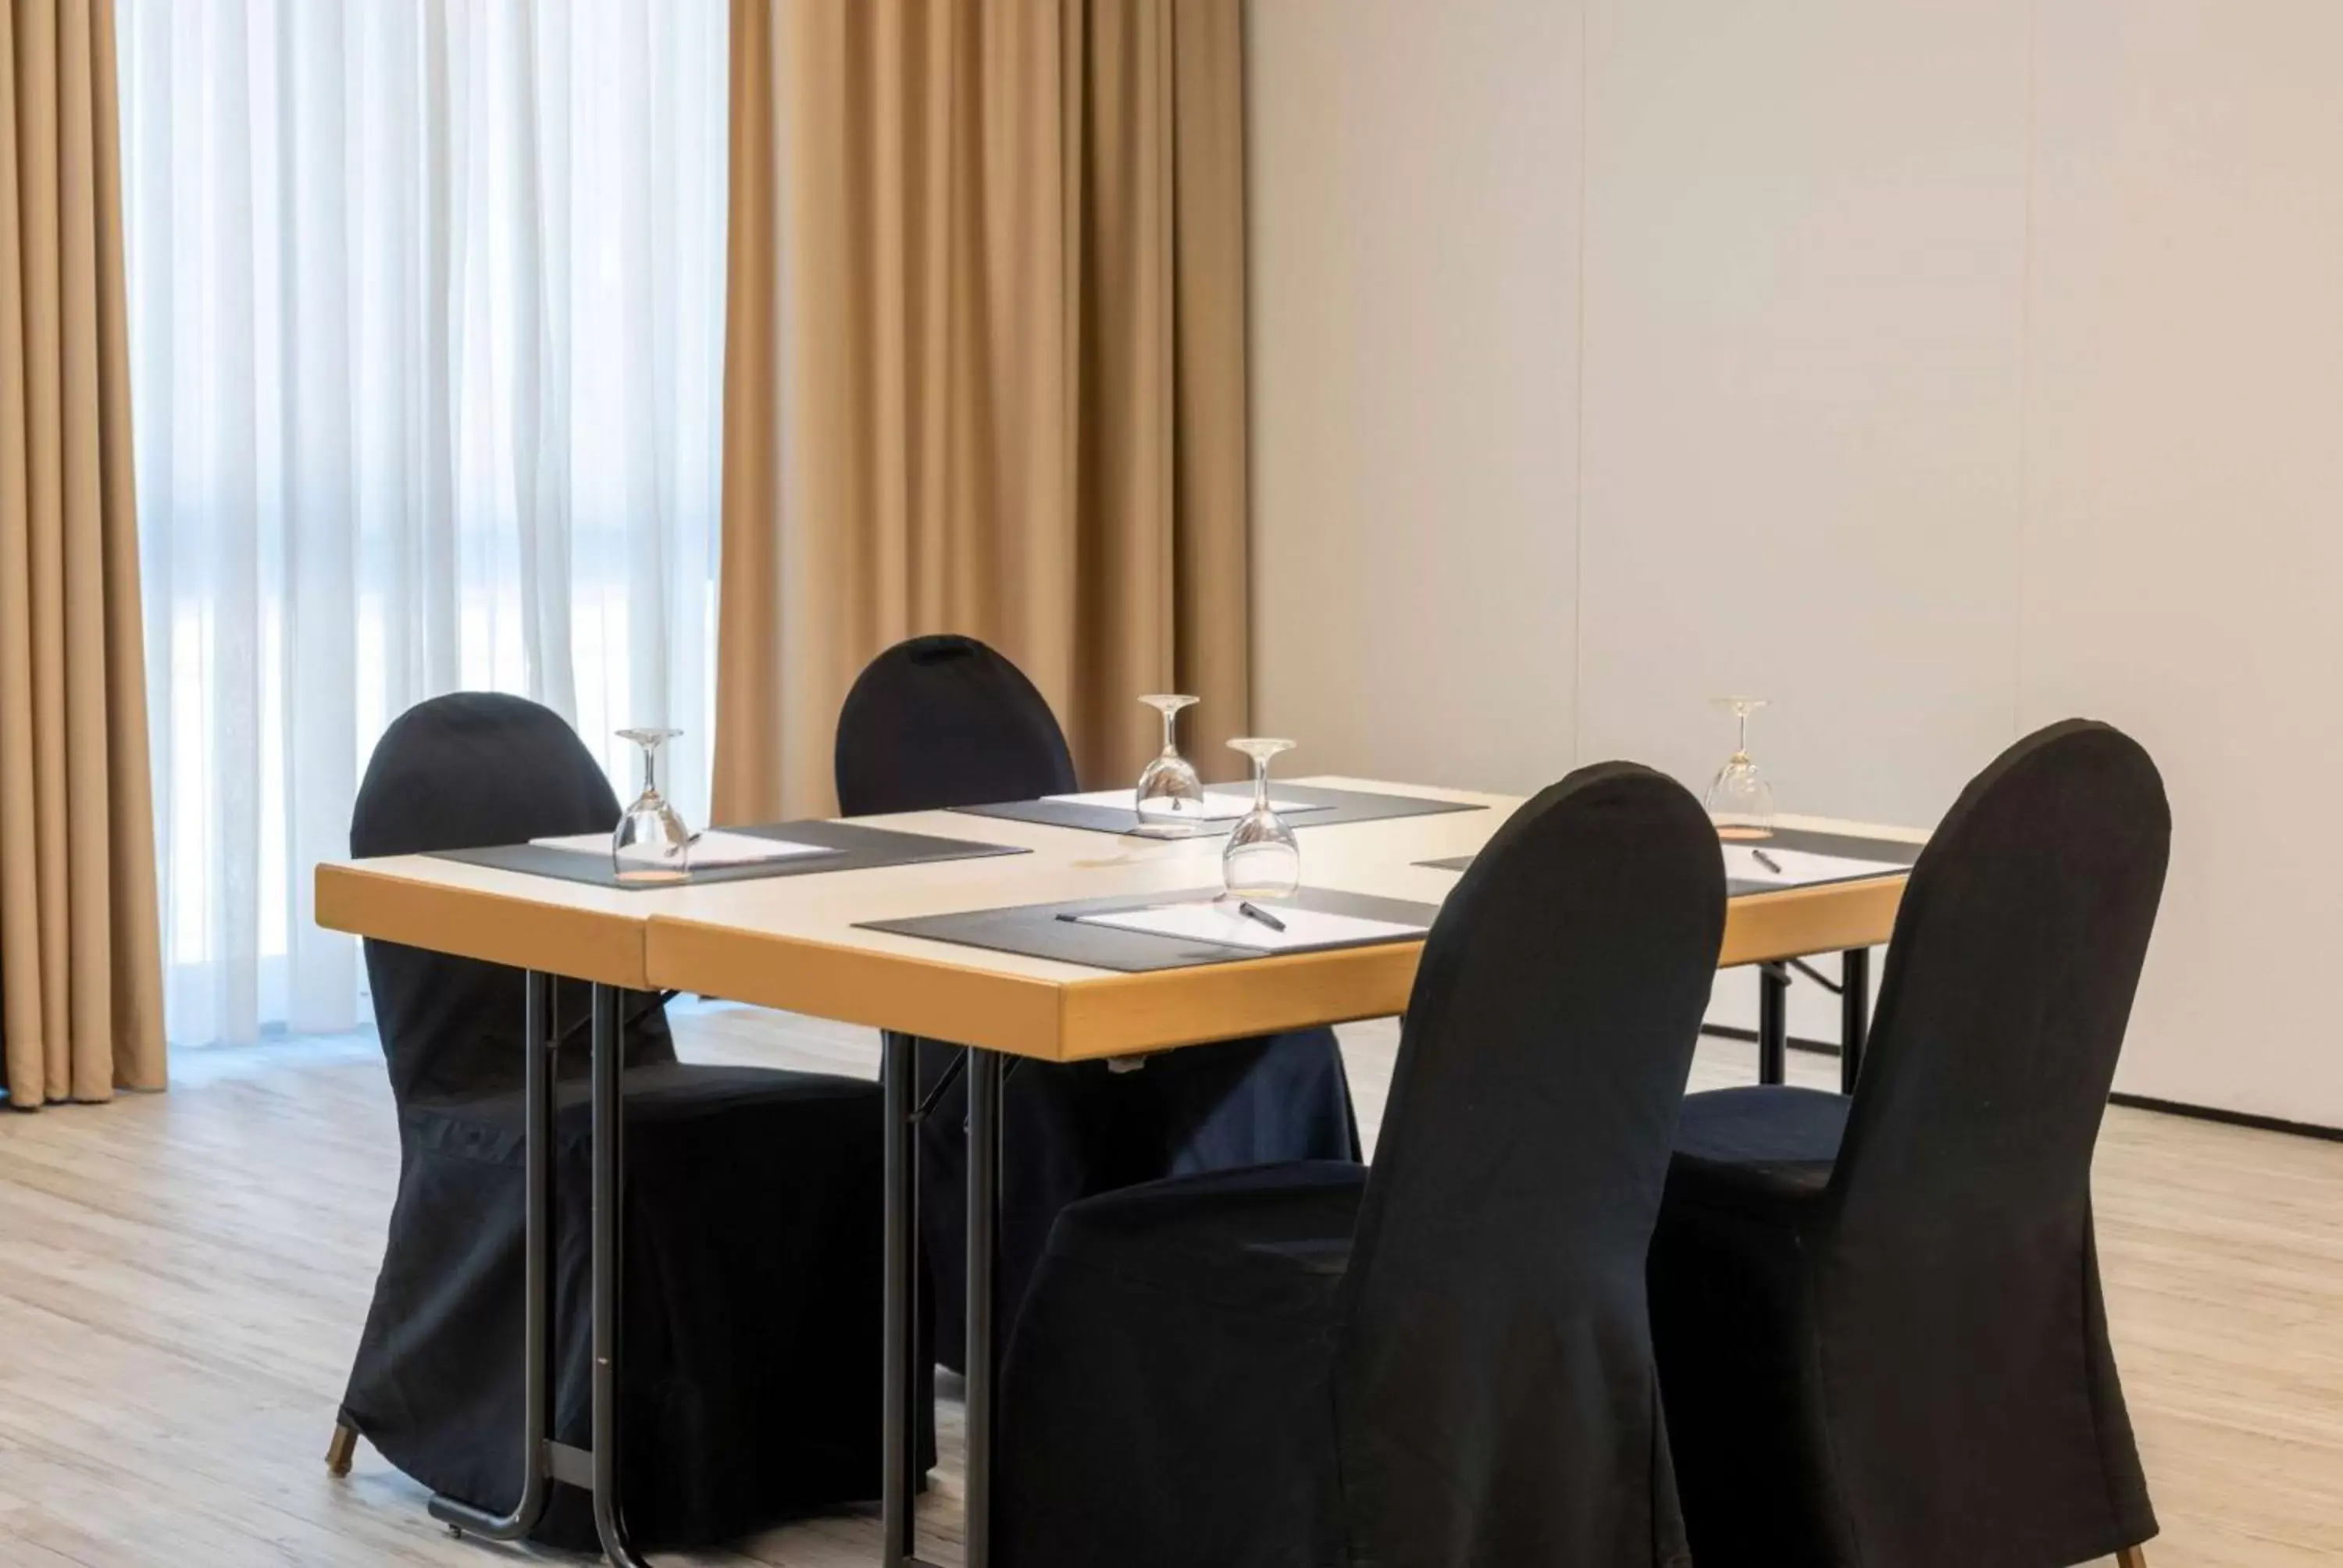 Meeting/conference room in Tryp by Wyndham Rosenheim